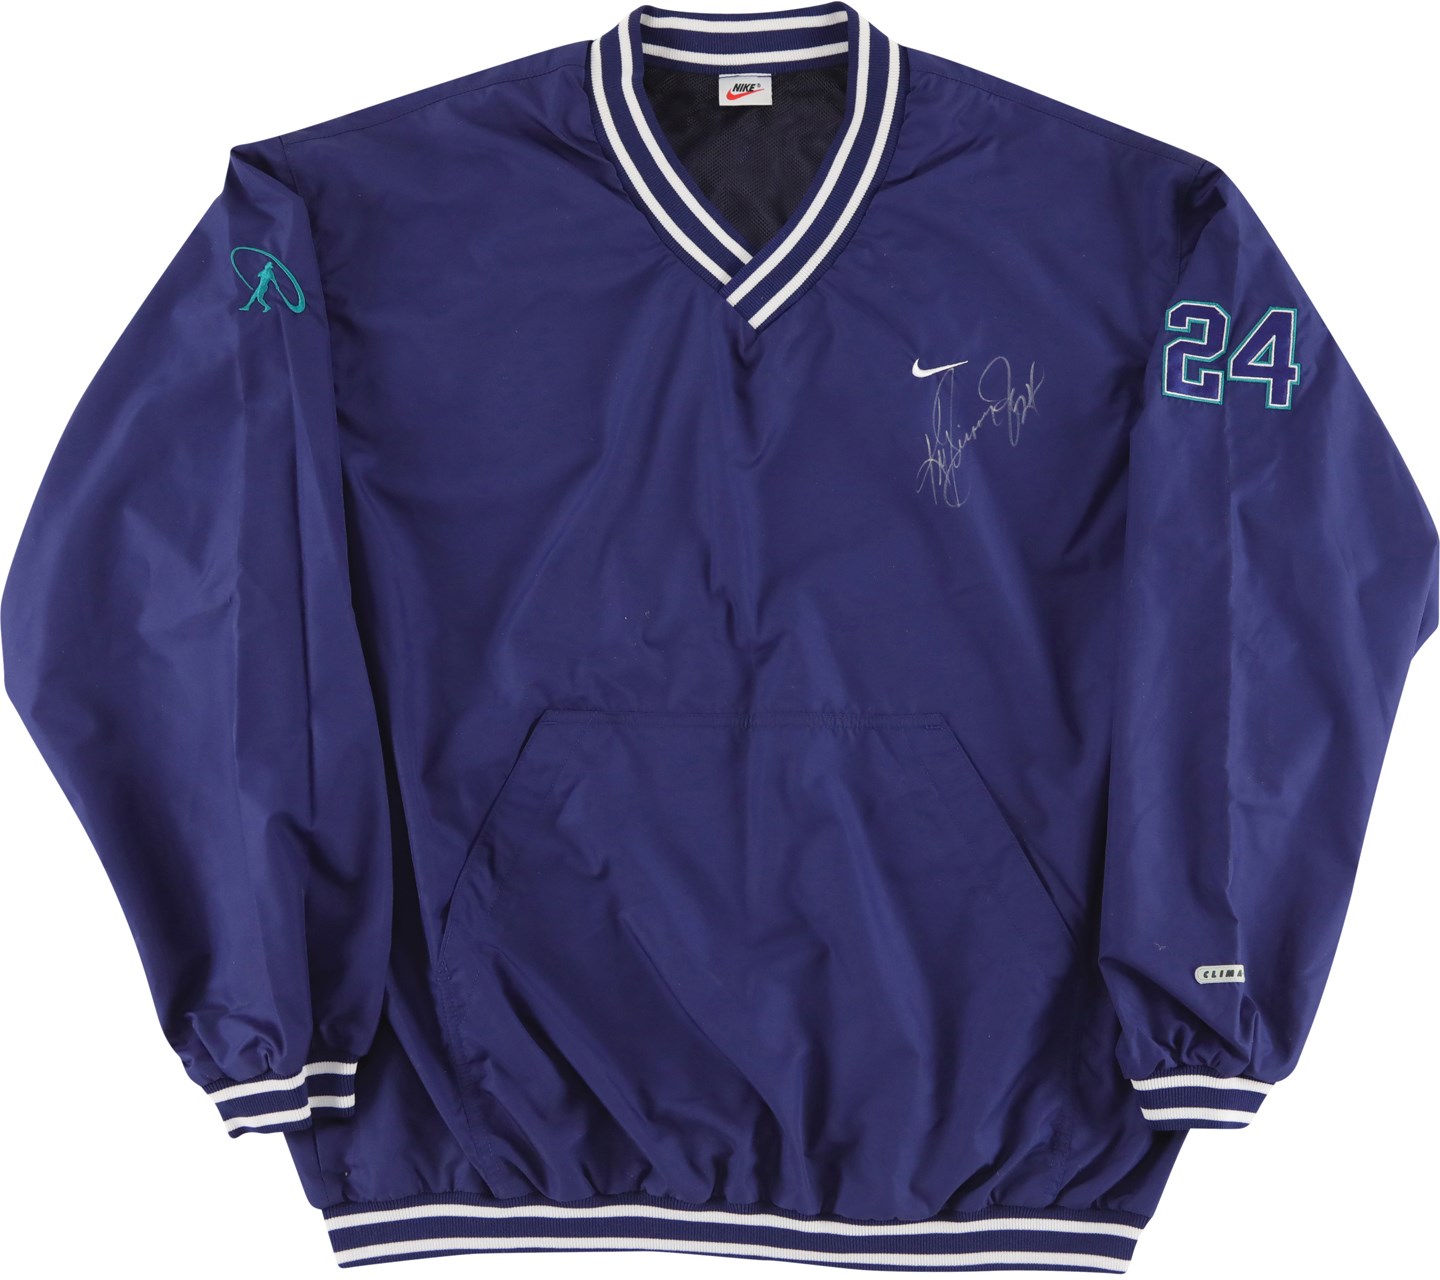 Baseball Equipment - 1998 Ken Griffey Jr. Seattle Mariners Signed Game Used Nike Warmup (Griffey Jr. COA)